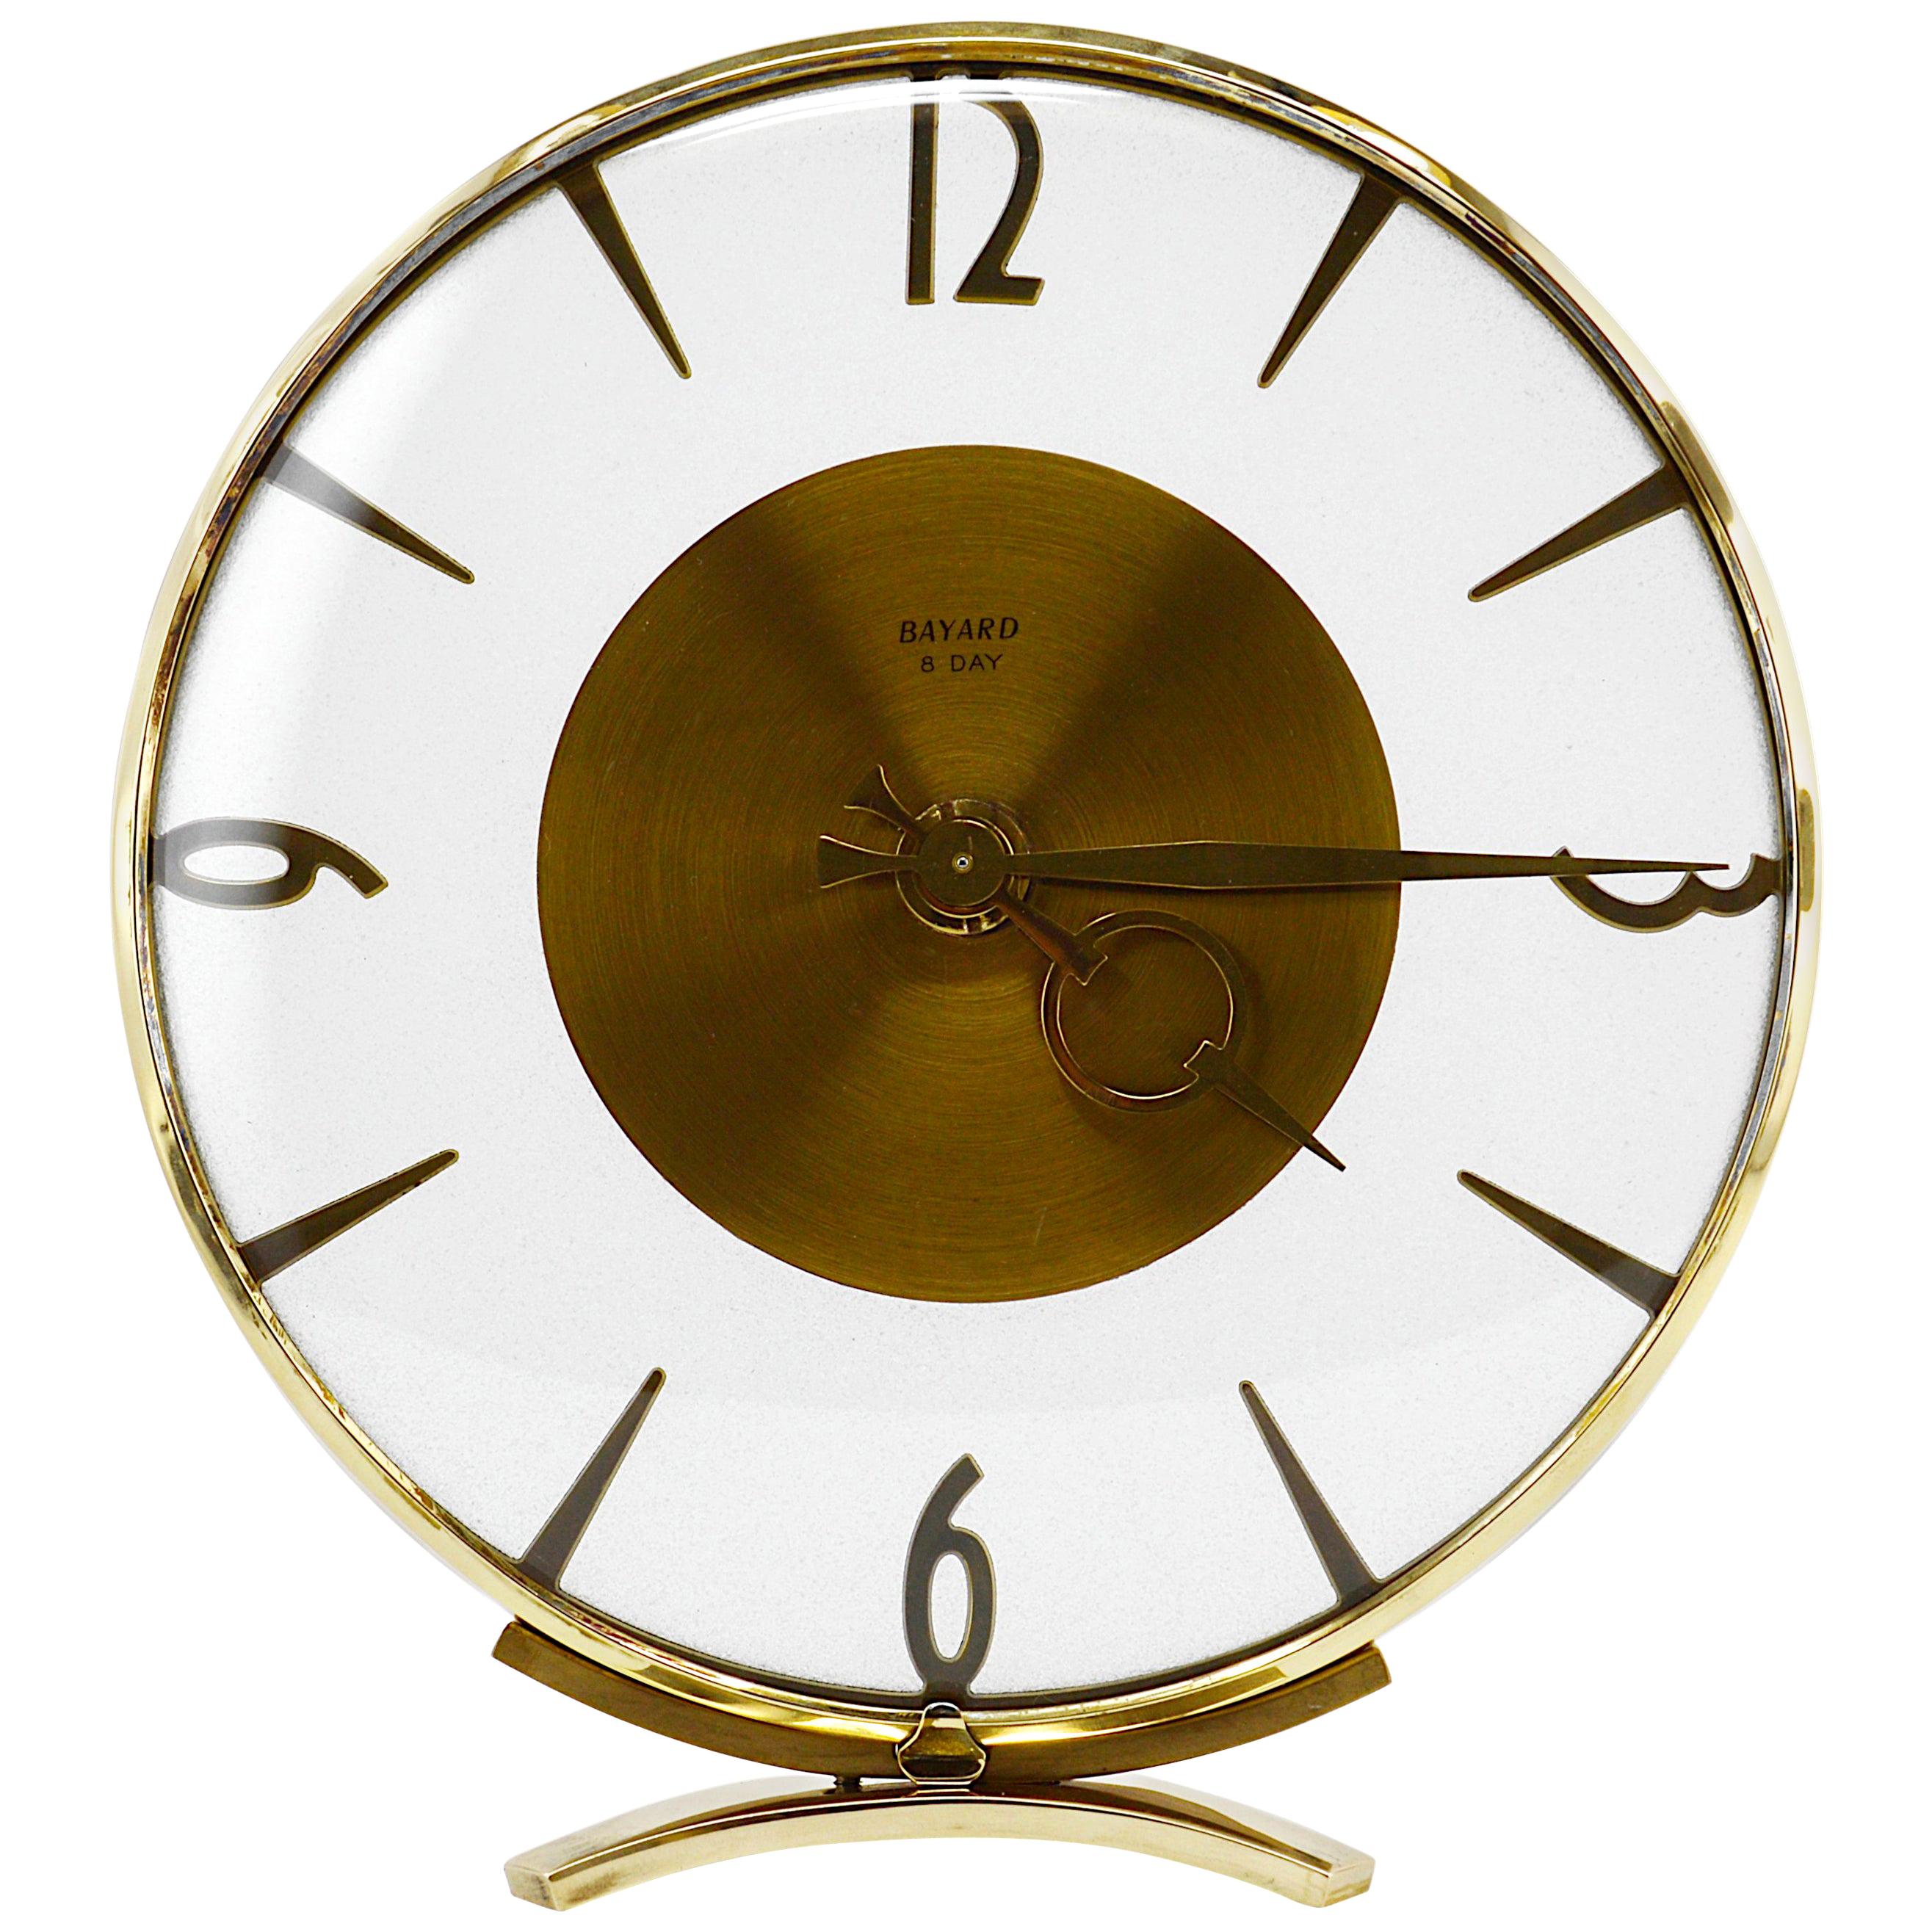 Bayard French Art Deco Round Clock, 1930s